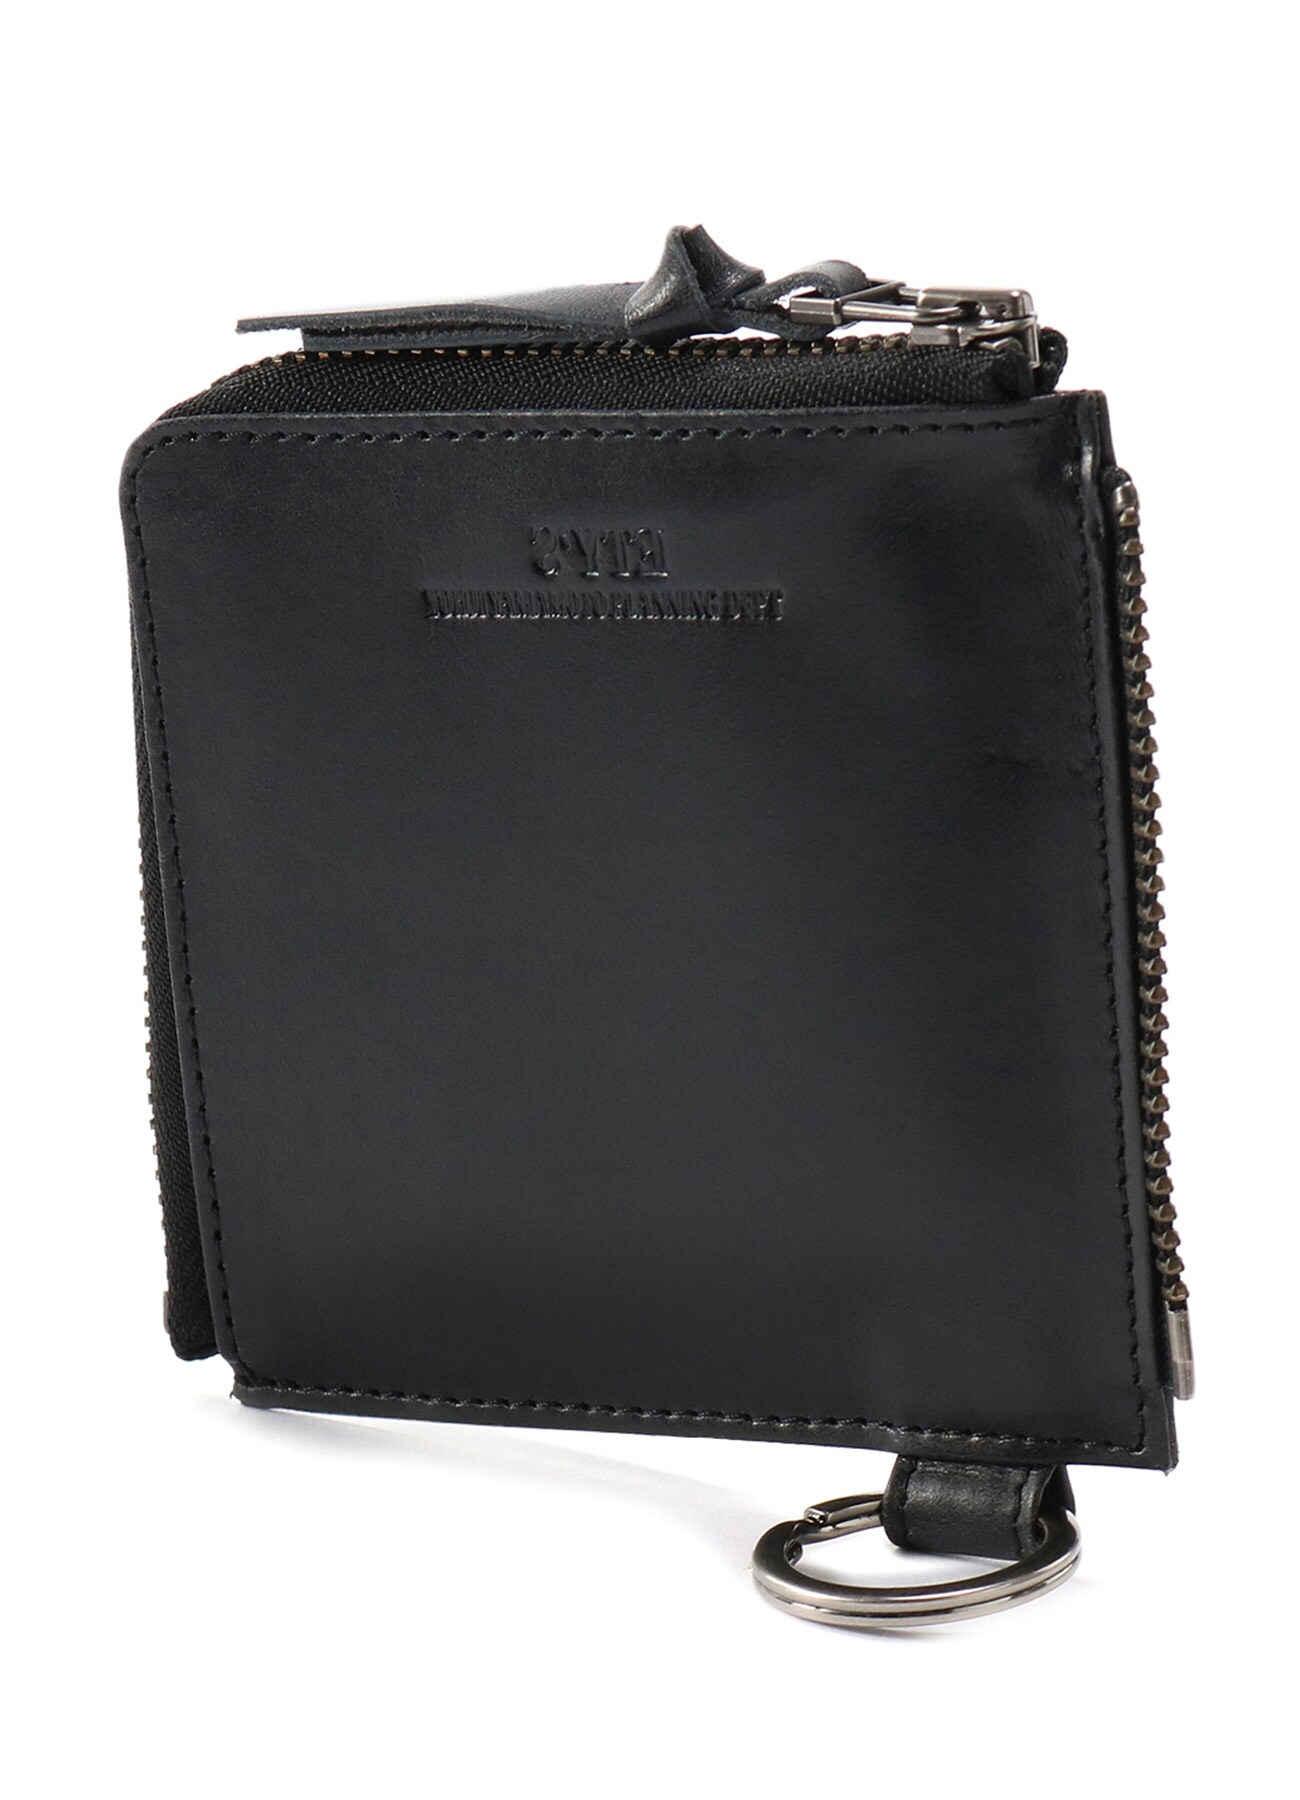 Cow Leather 2WAY Detachable Mini Wallet